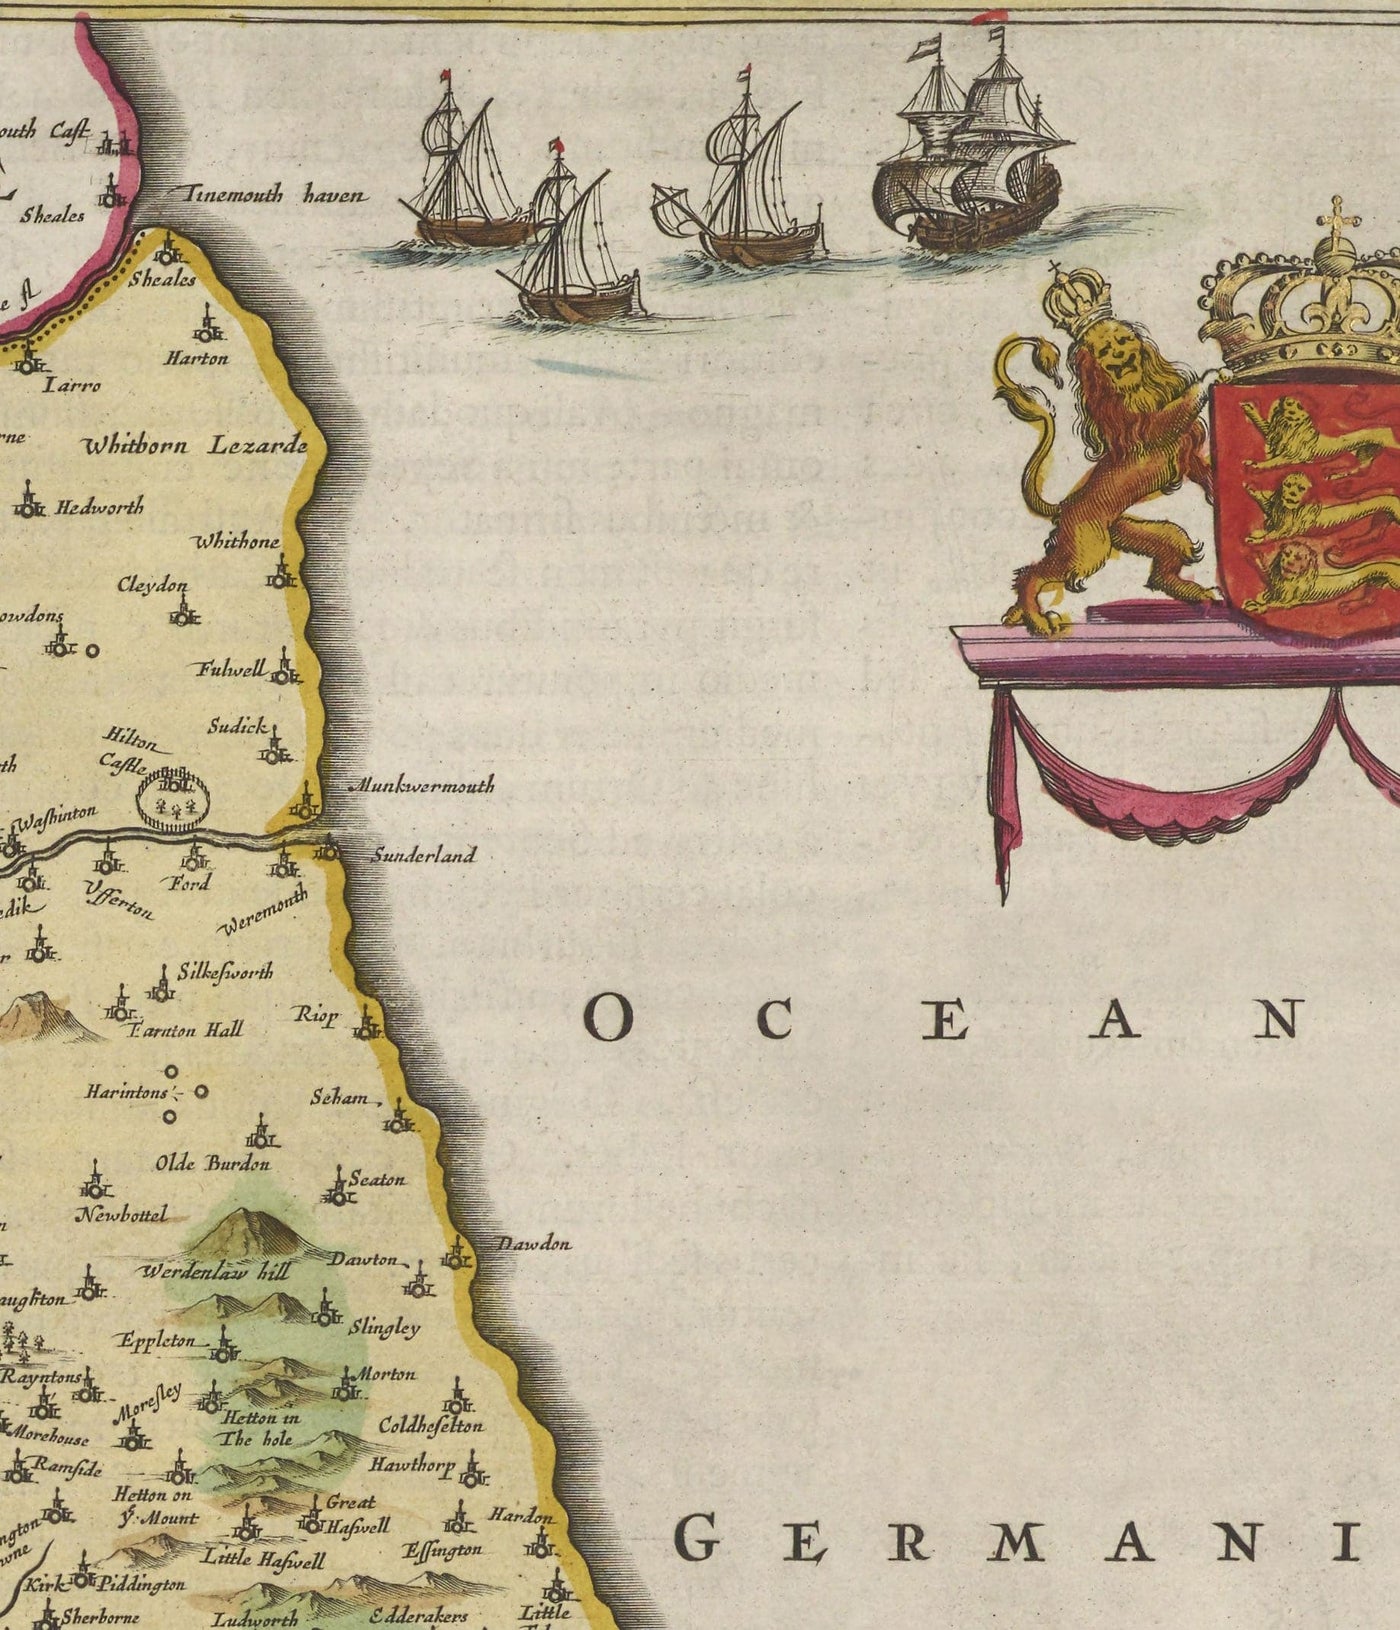 Old Map of County Durham, 1665 by Joan Blaeu - Darlington, Stockton-on-Tees, Sunderland, Hartlepool, Newcastle, Gateshead